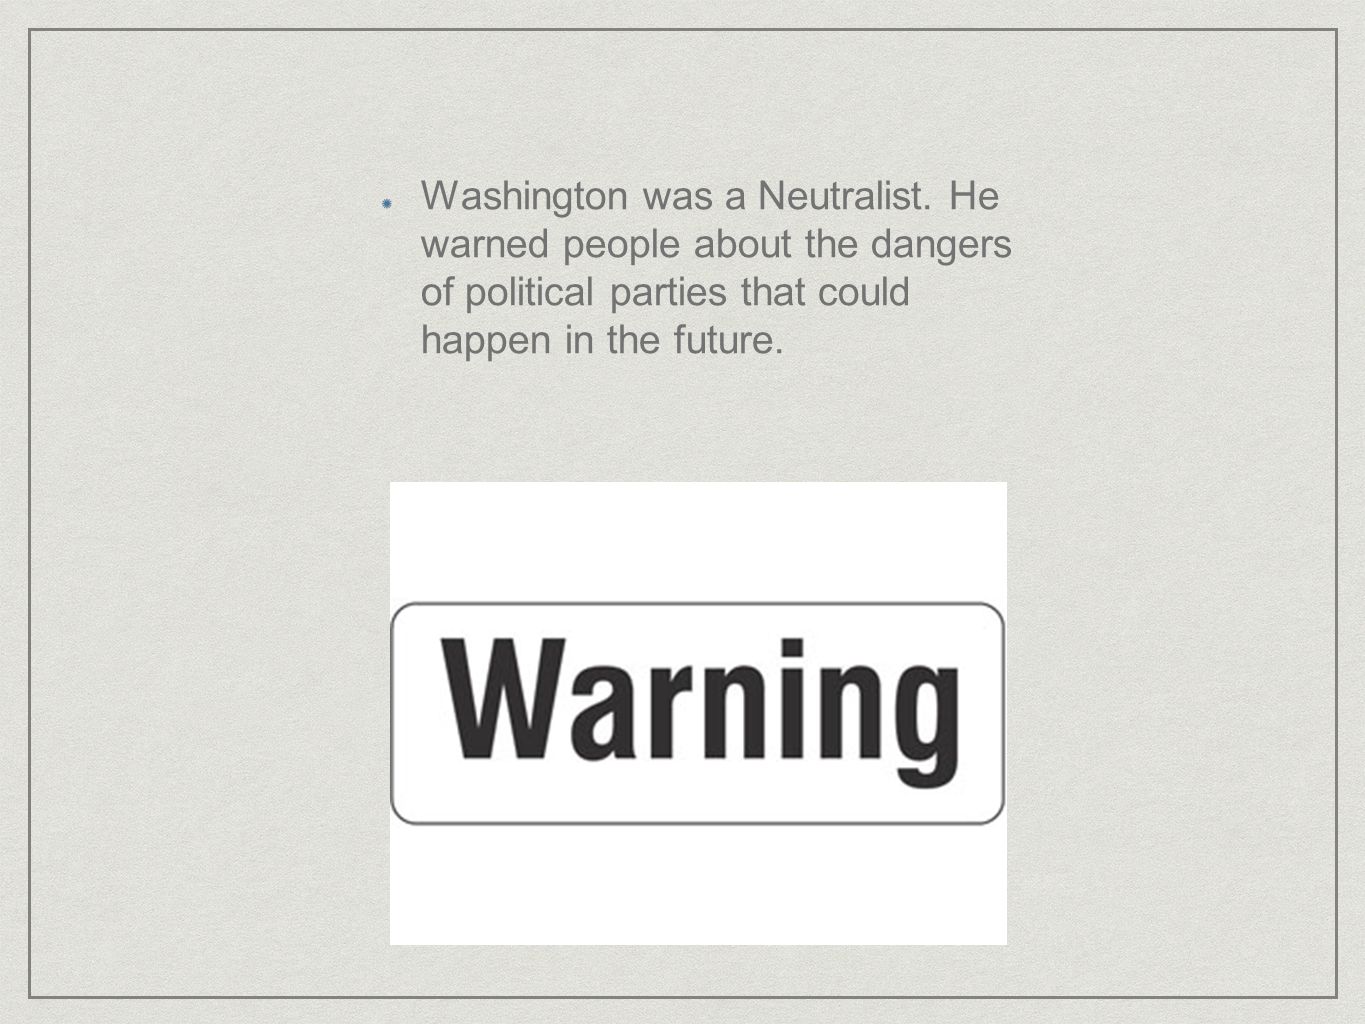 Washington was a Neutralist.